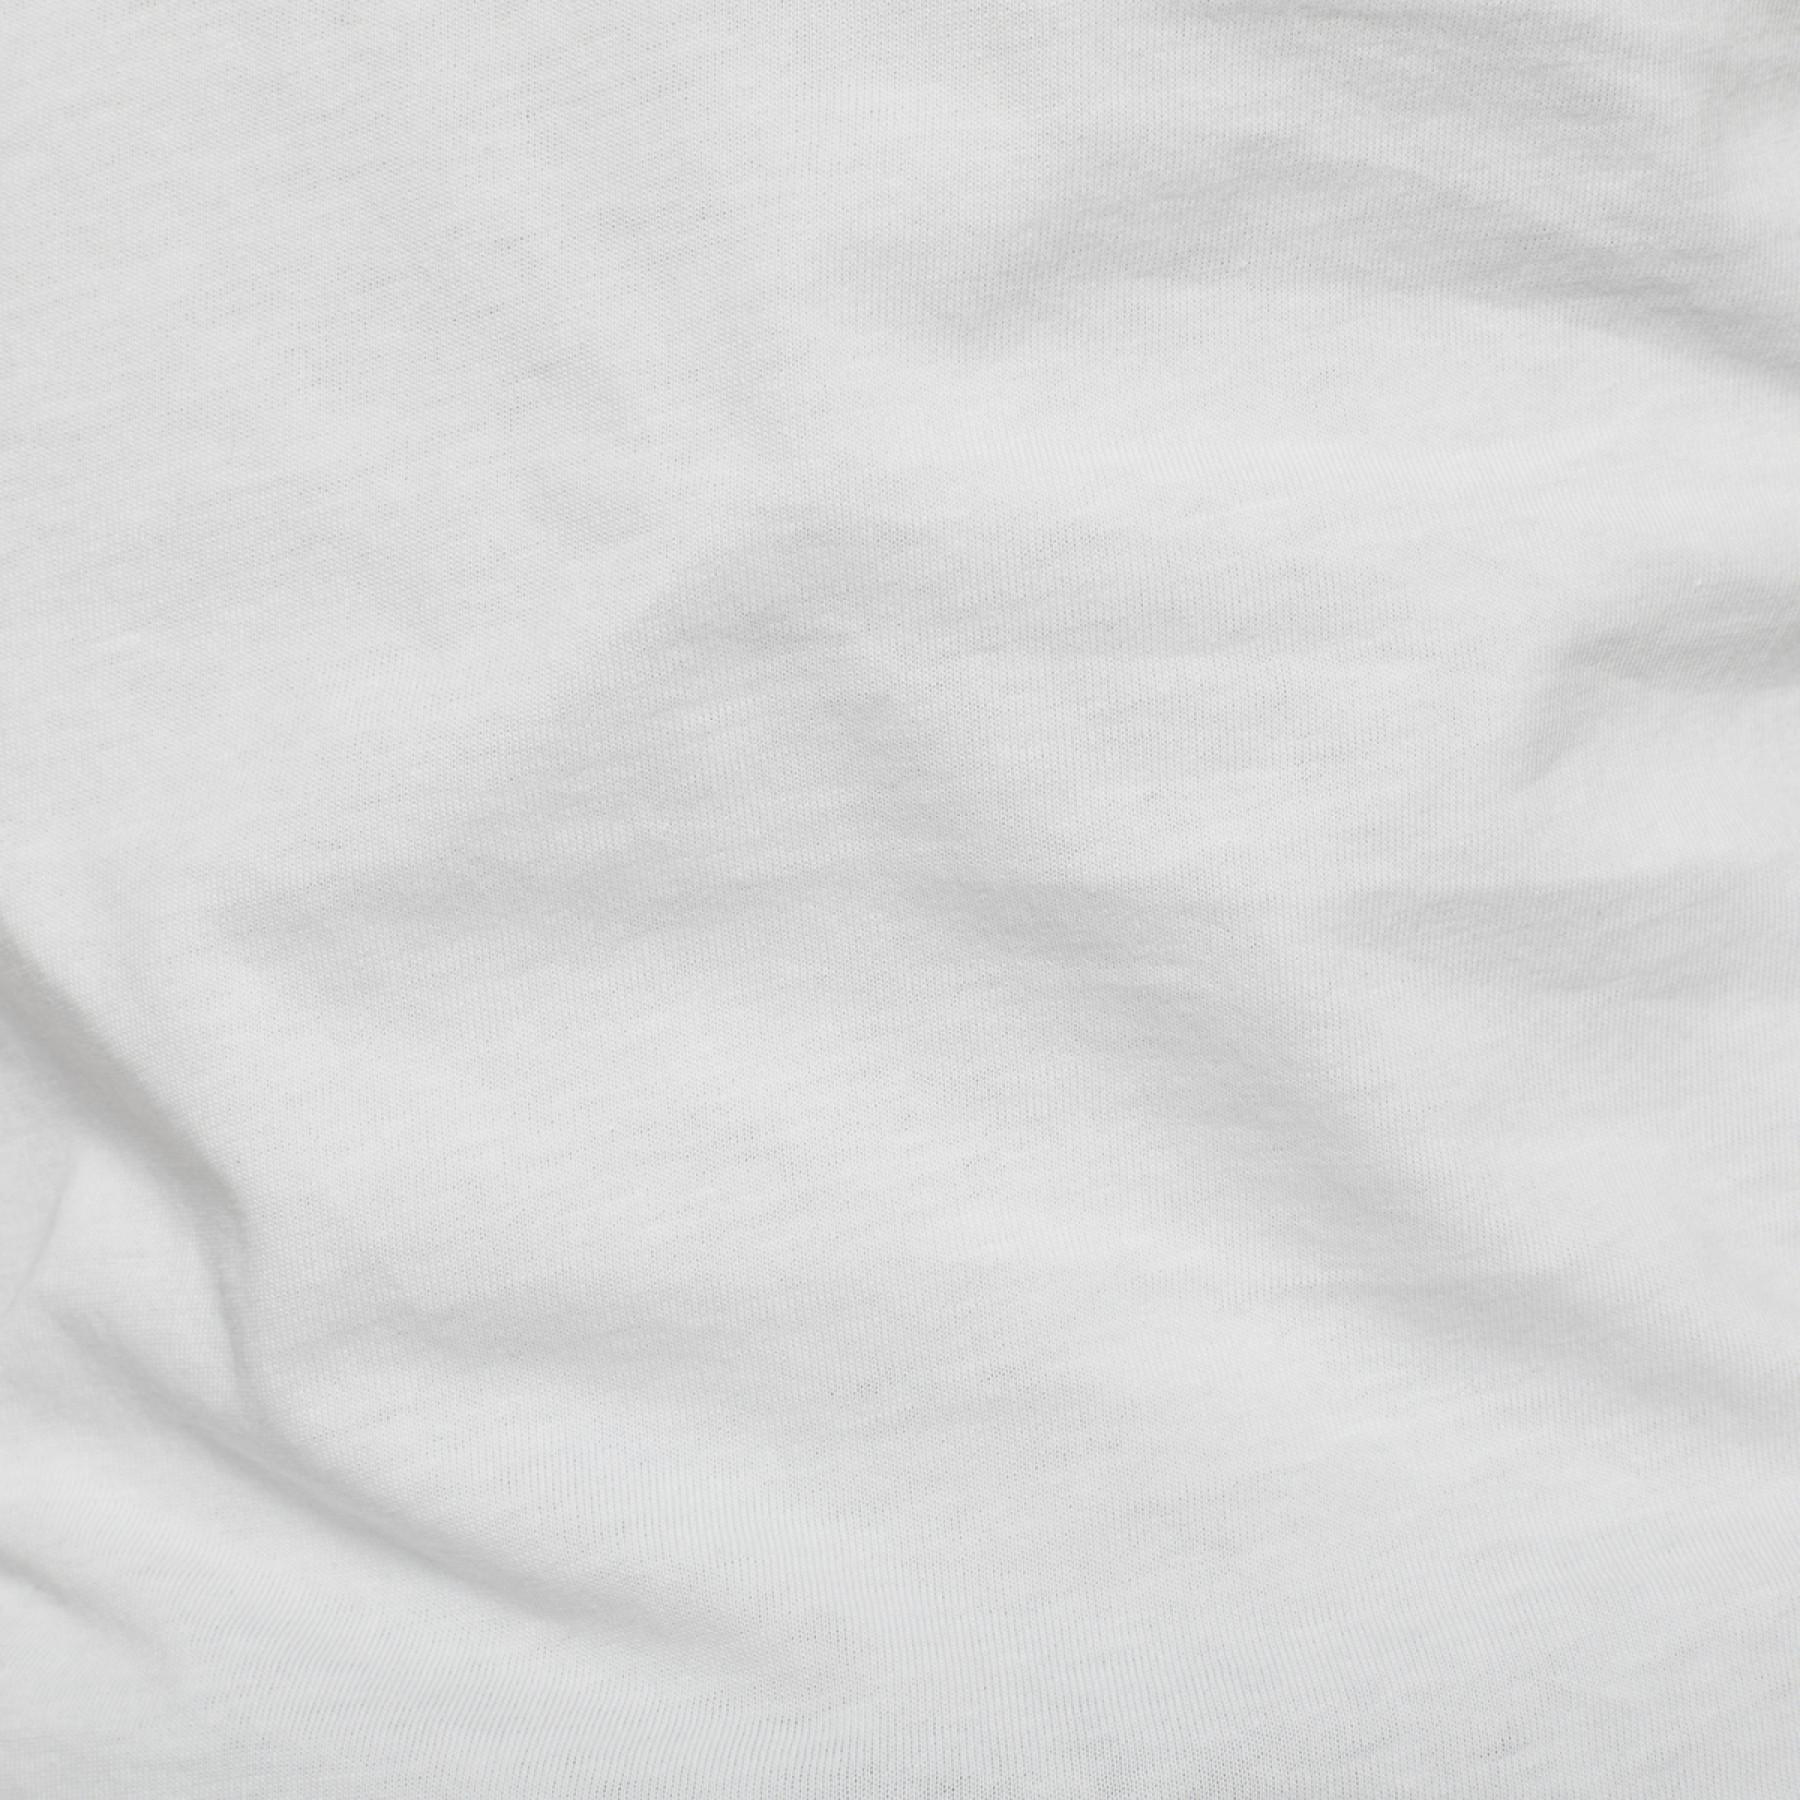 Camiseta feminina Reebok GB Cotton V-Neck Vector